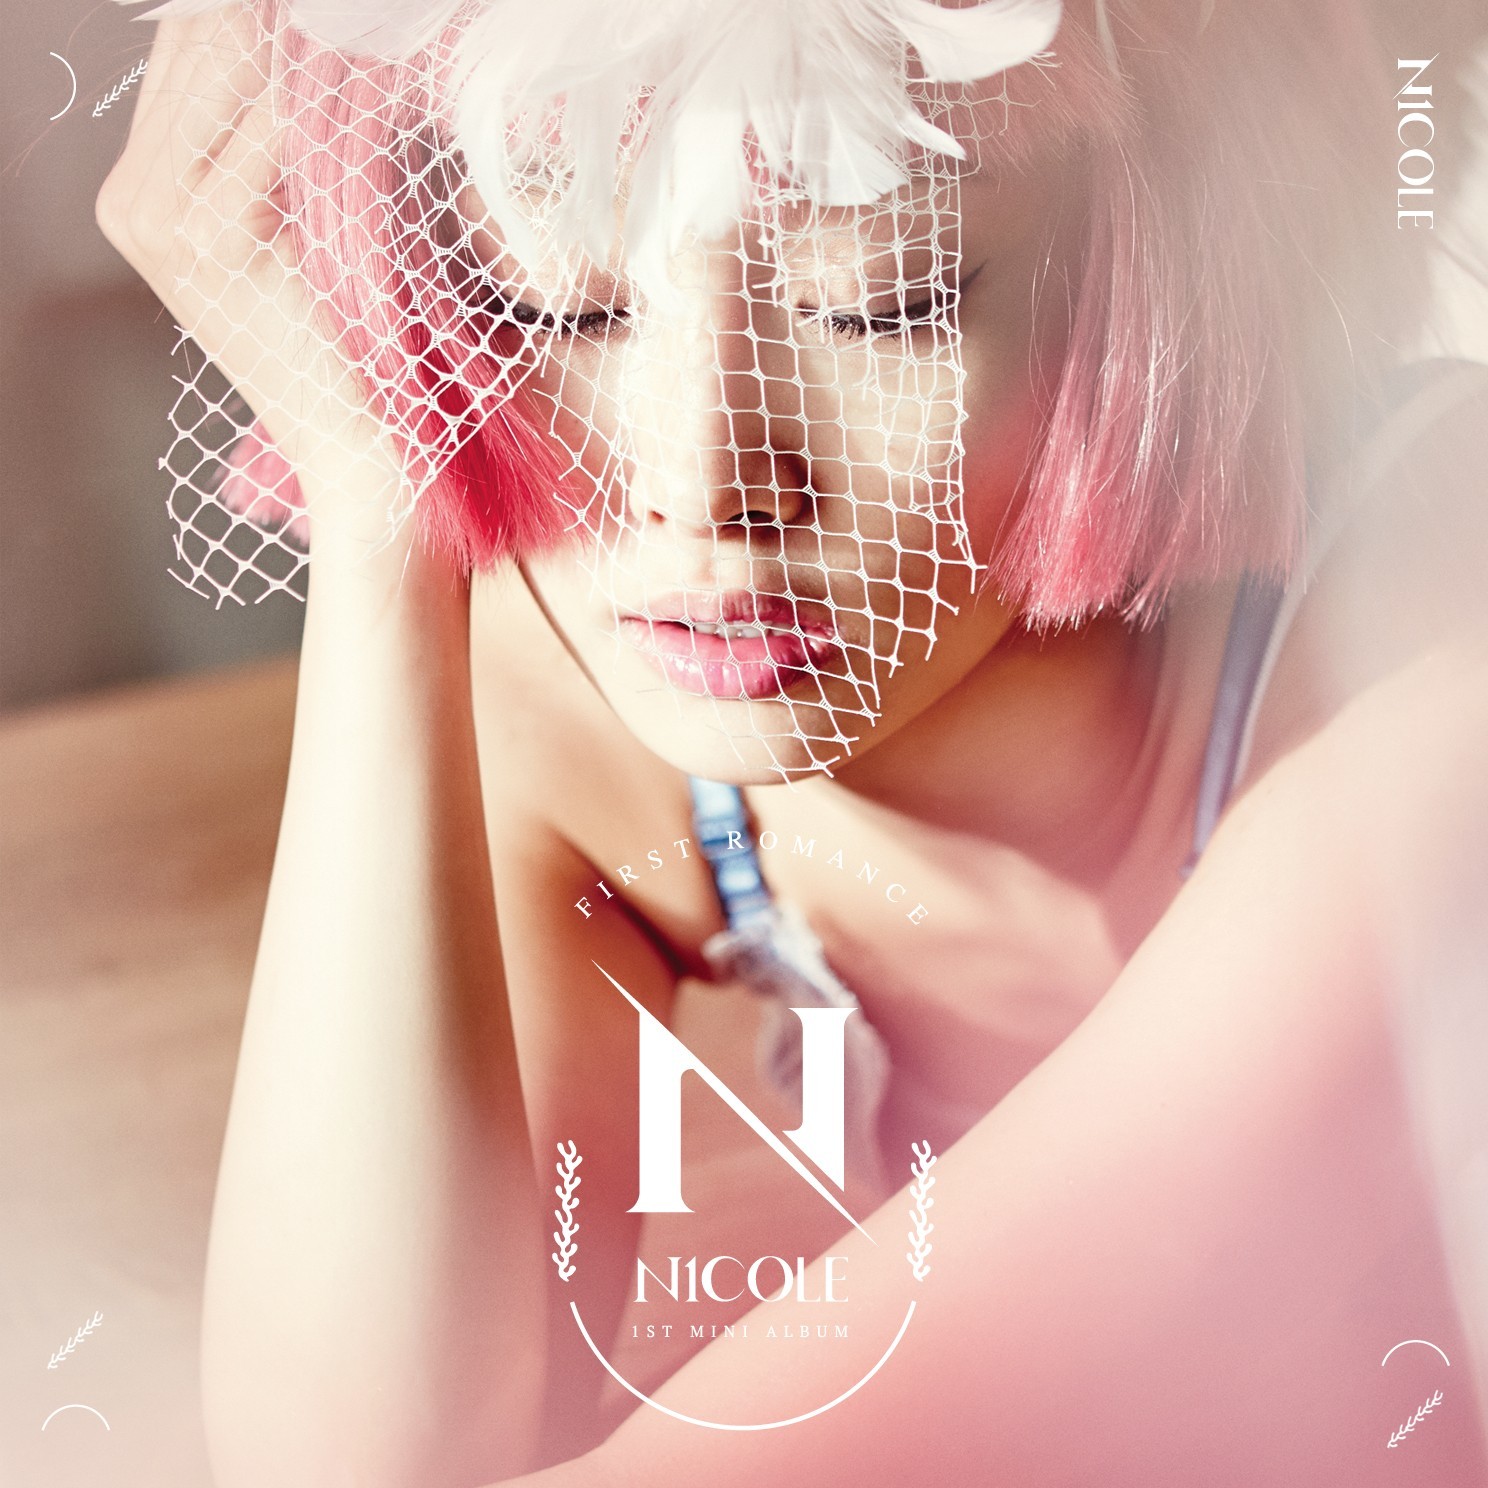 20190110.1240.36 Nicole - First Romance (FLAC) cover.jpg